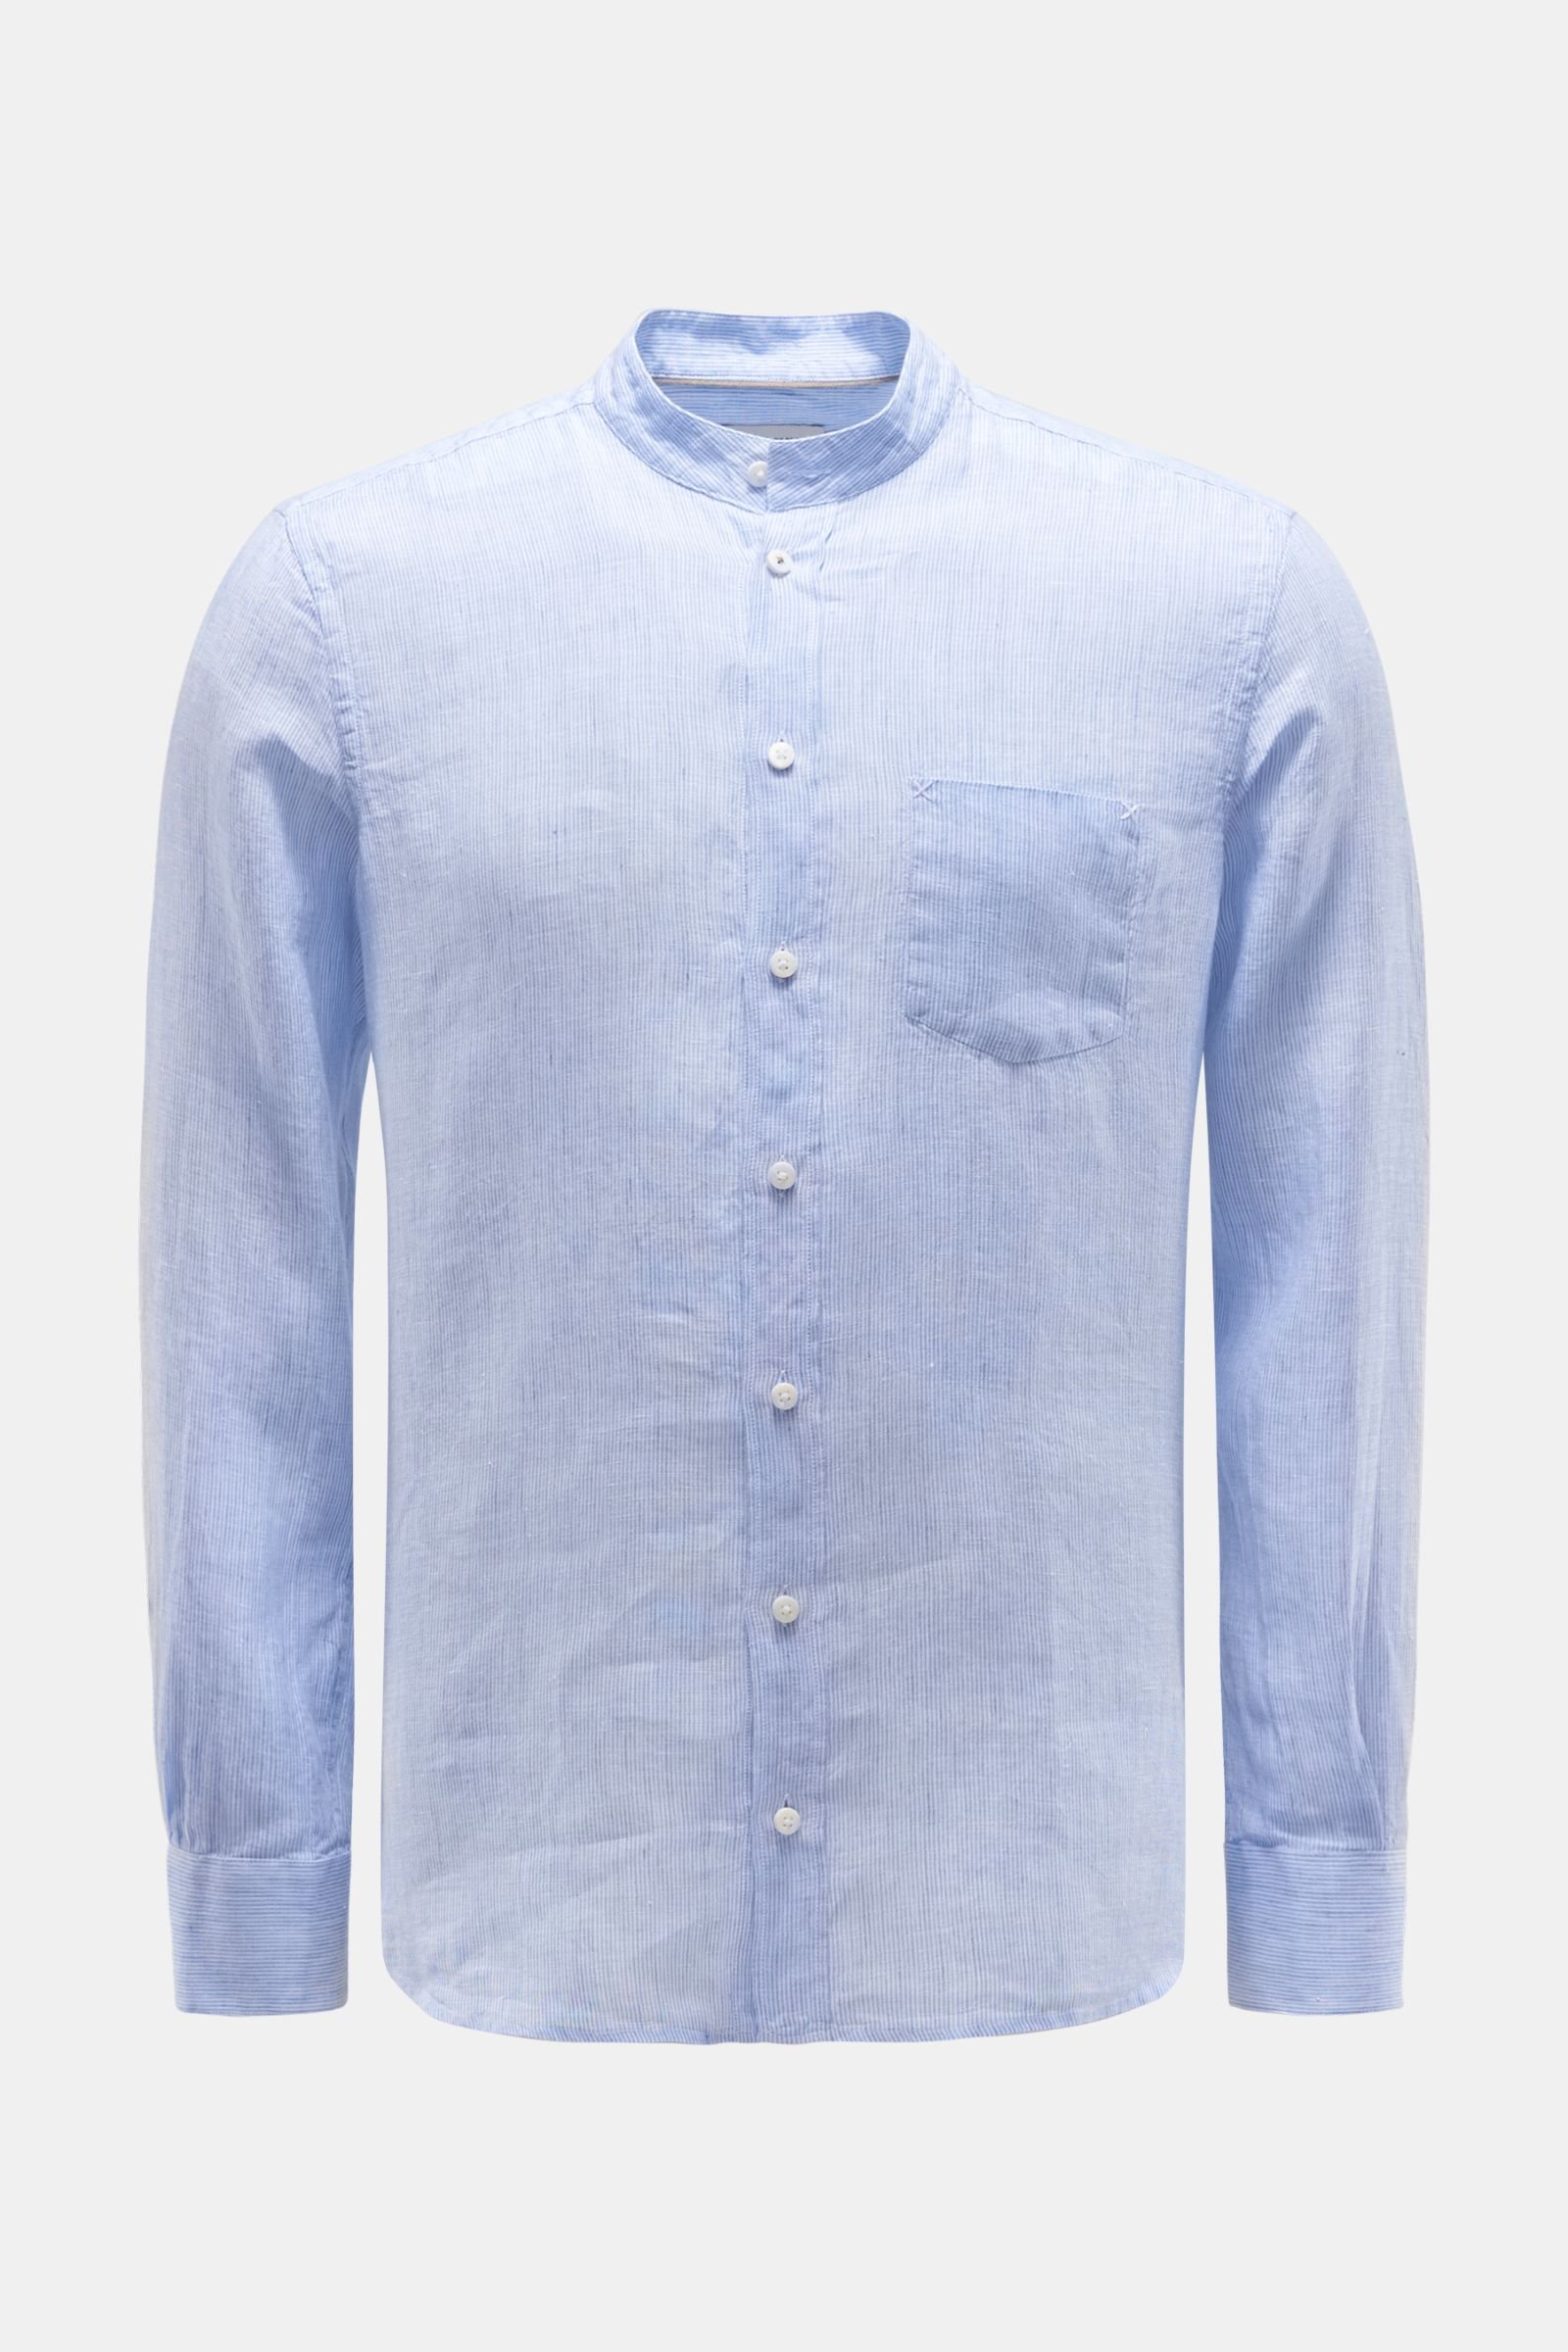 Linen shirt Grandad collar smoky blue/white striped